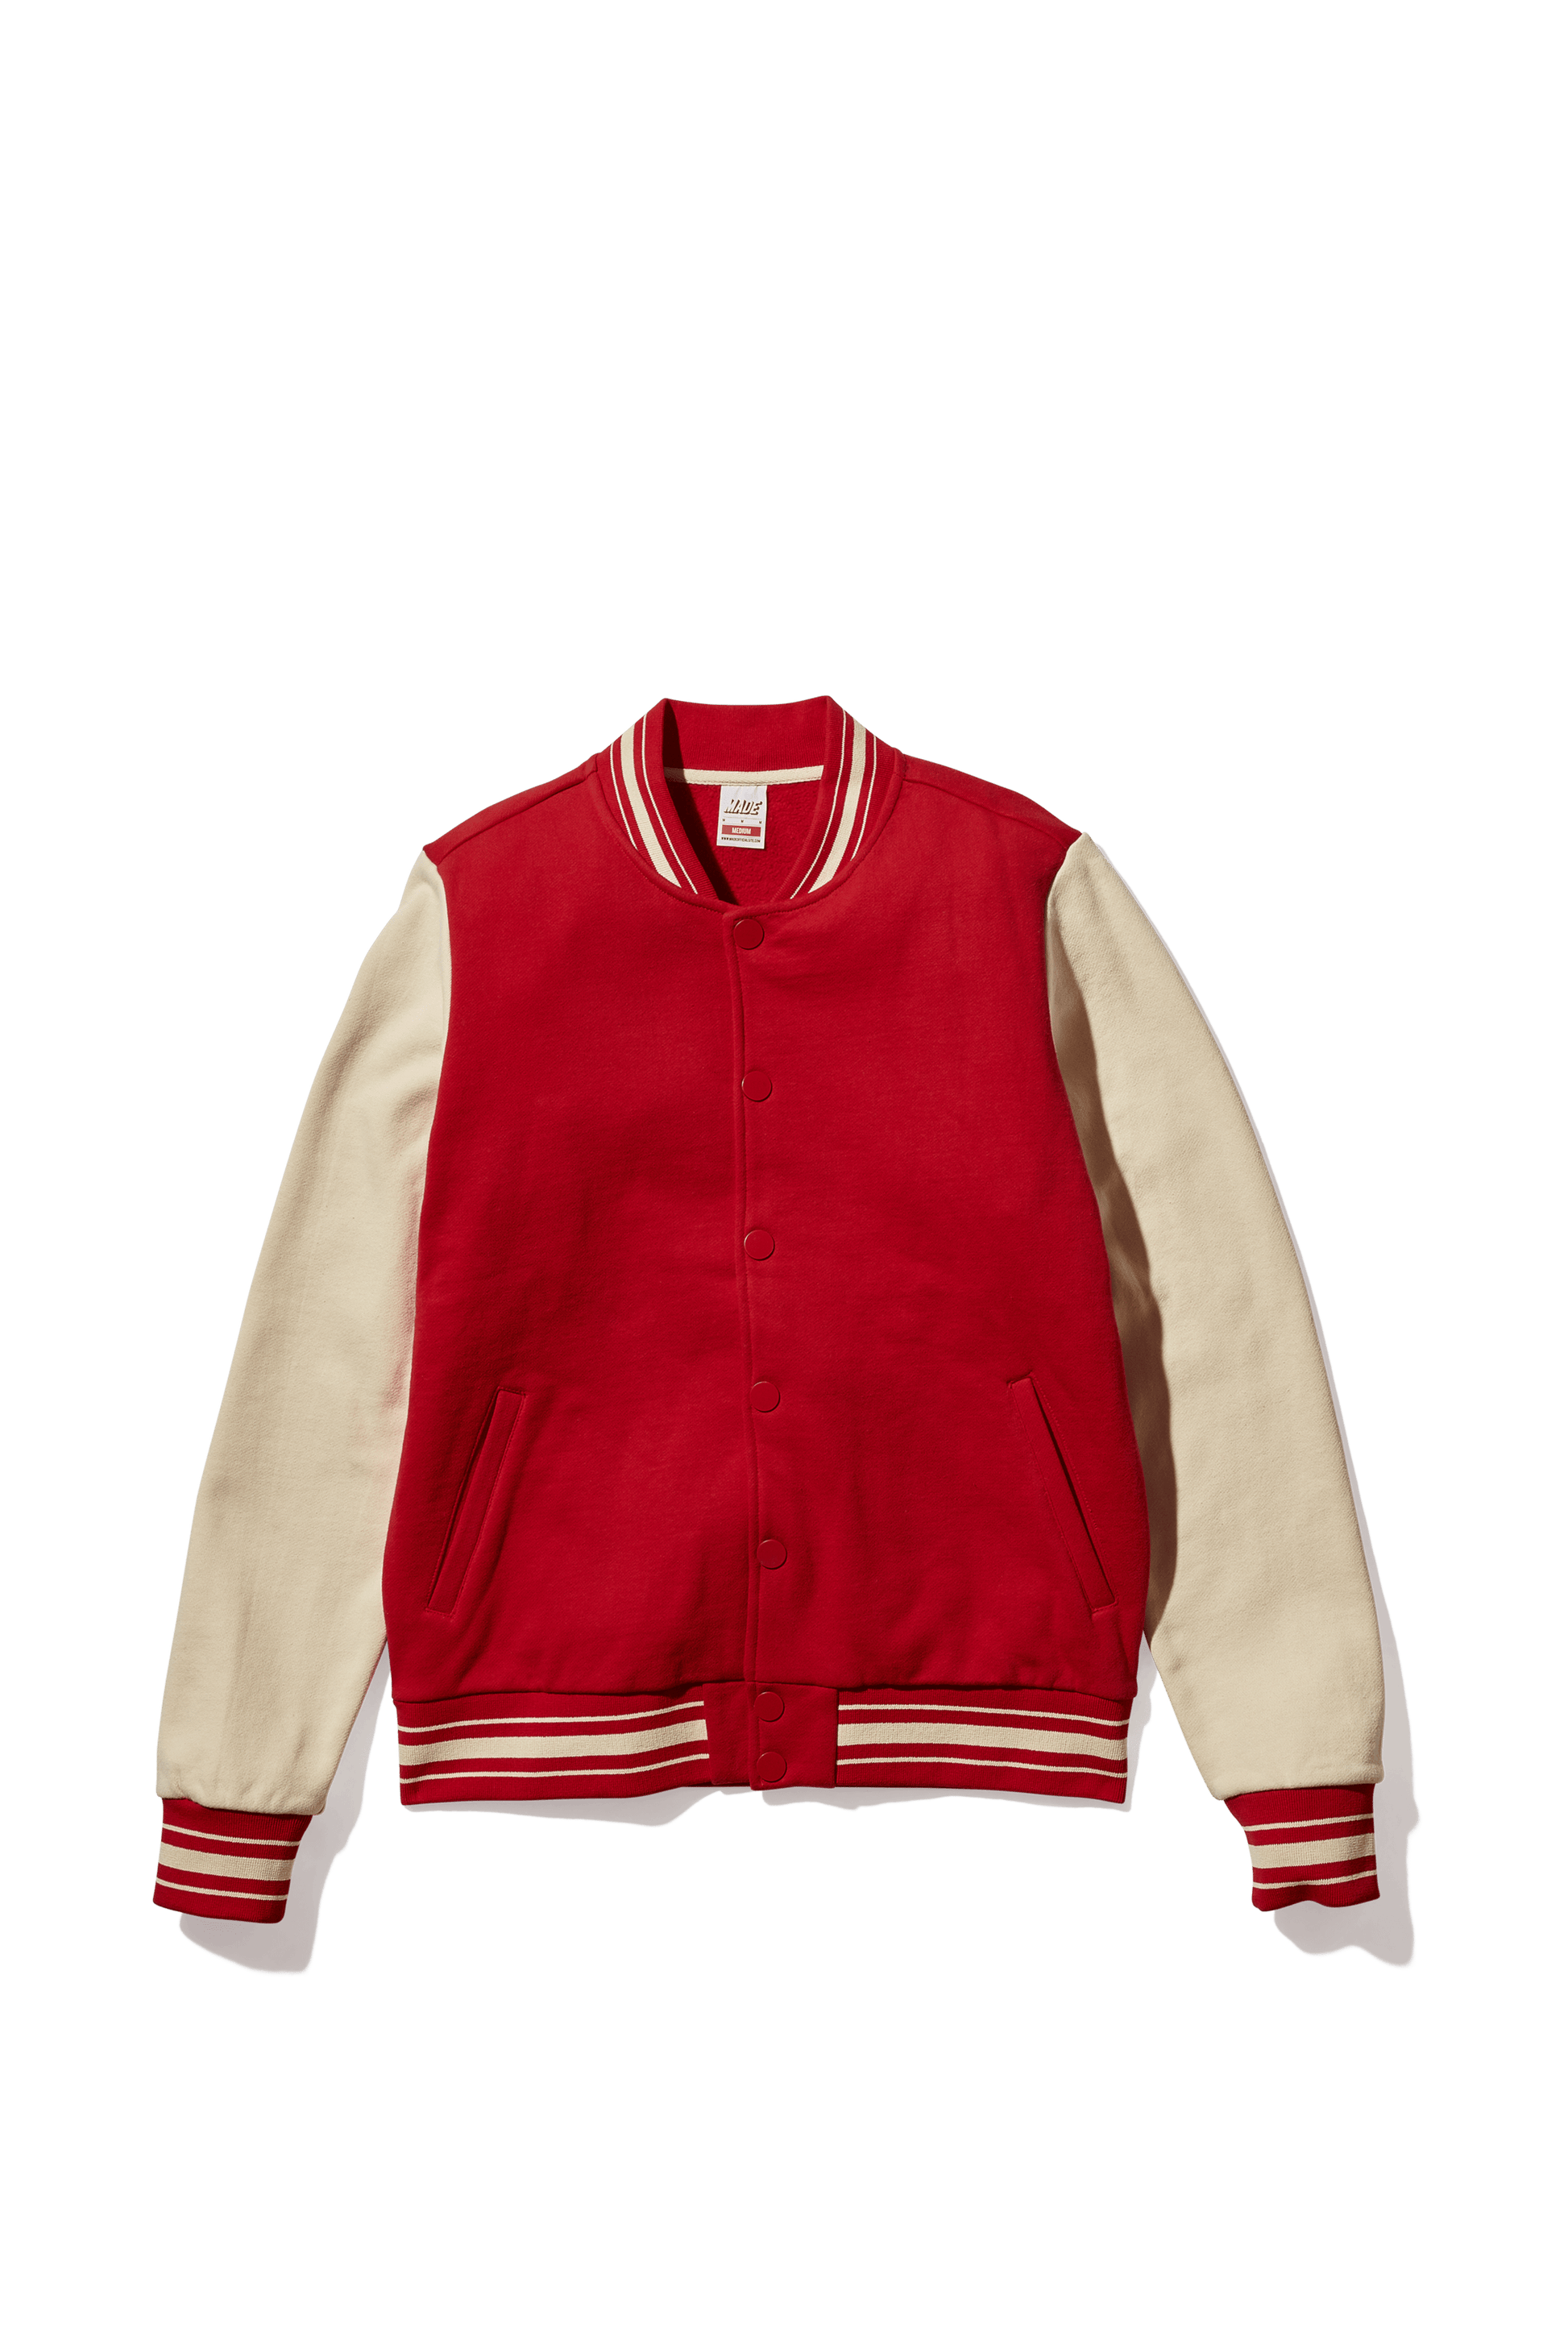 Red And Cream Baseball Varsity Jacket - Maker of Jacket